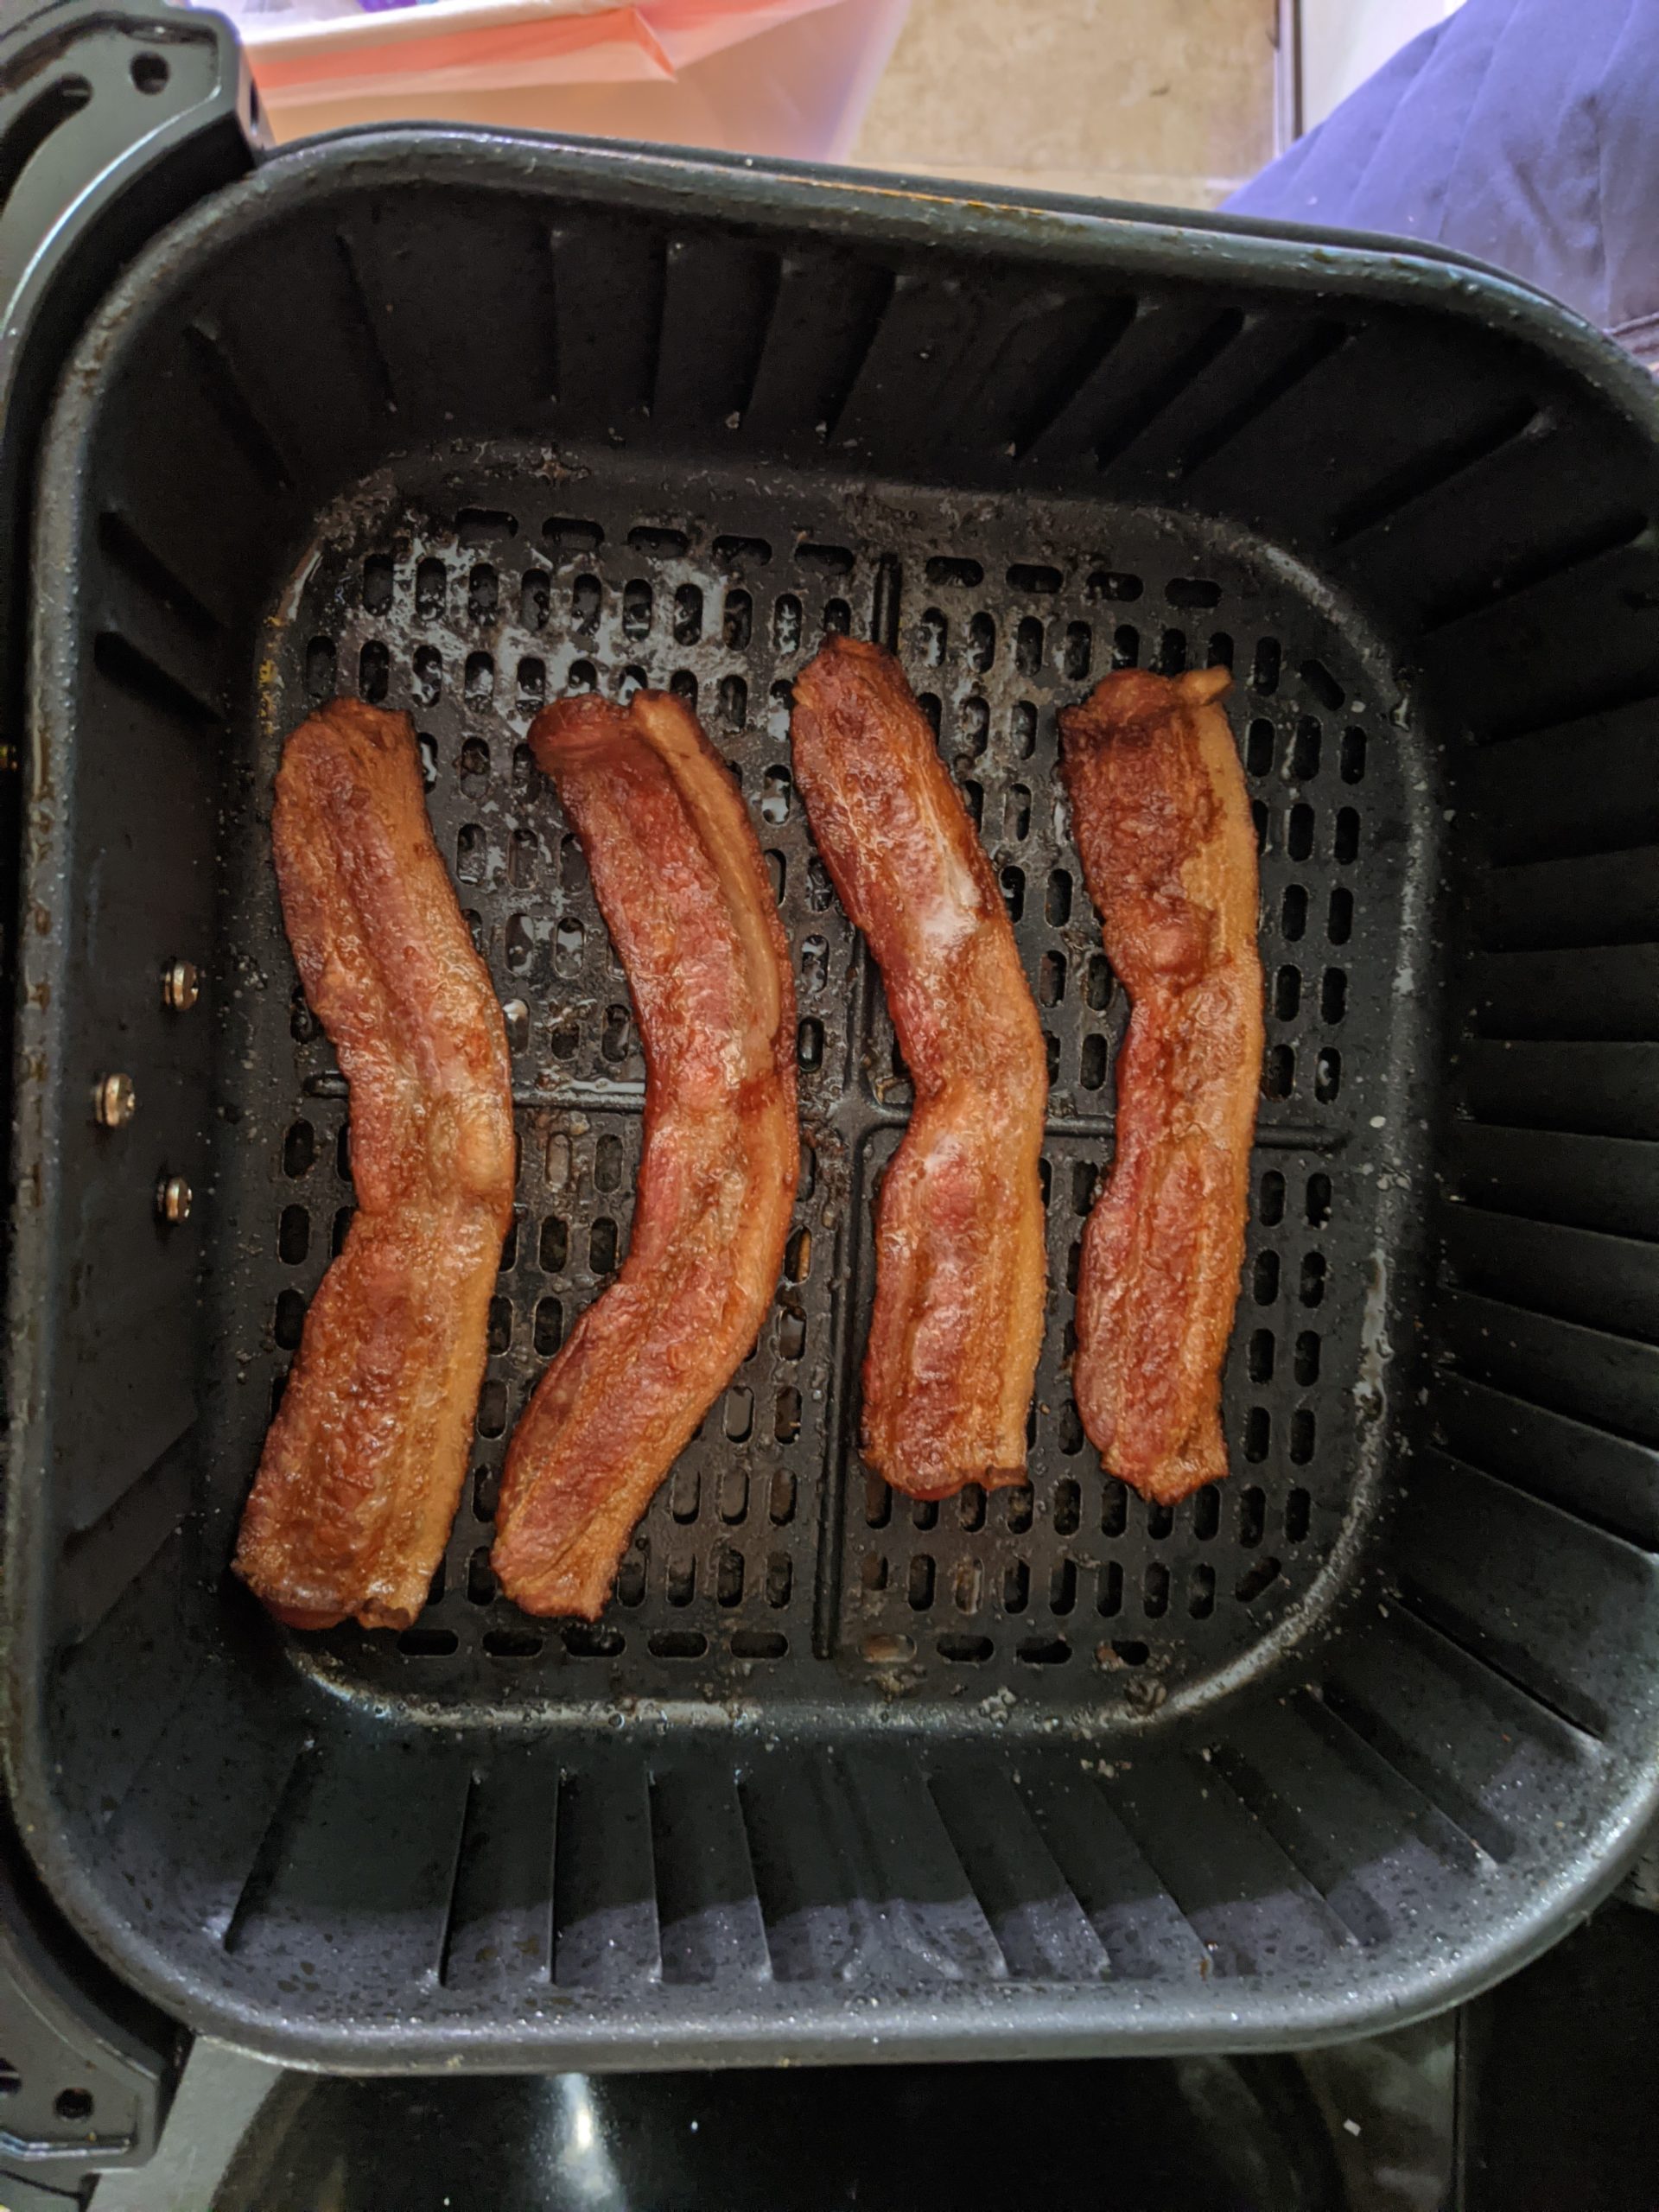 Bacon in an Air Fryer